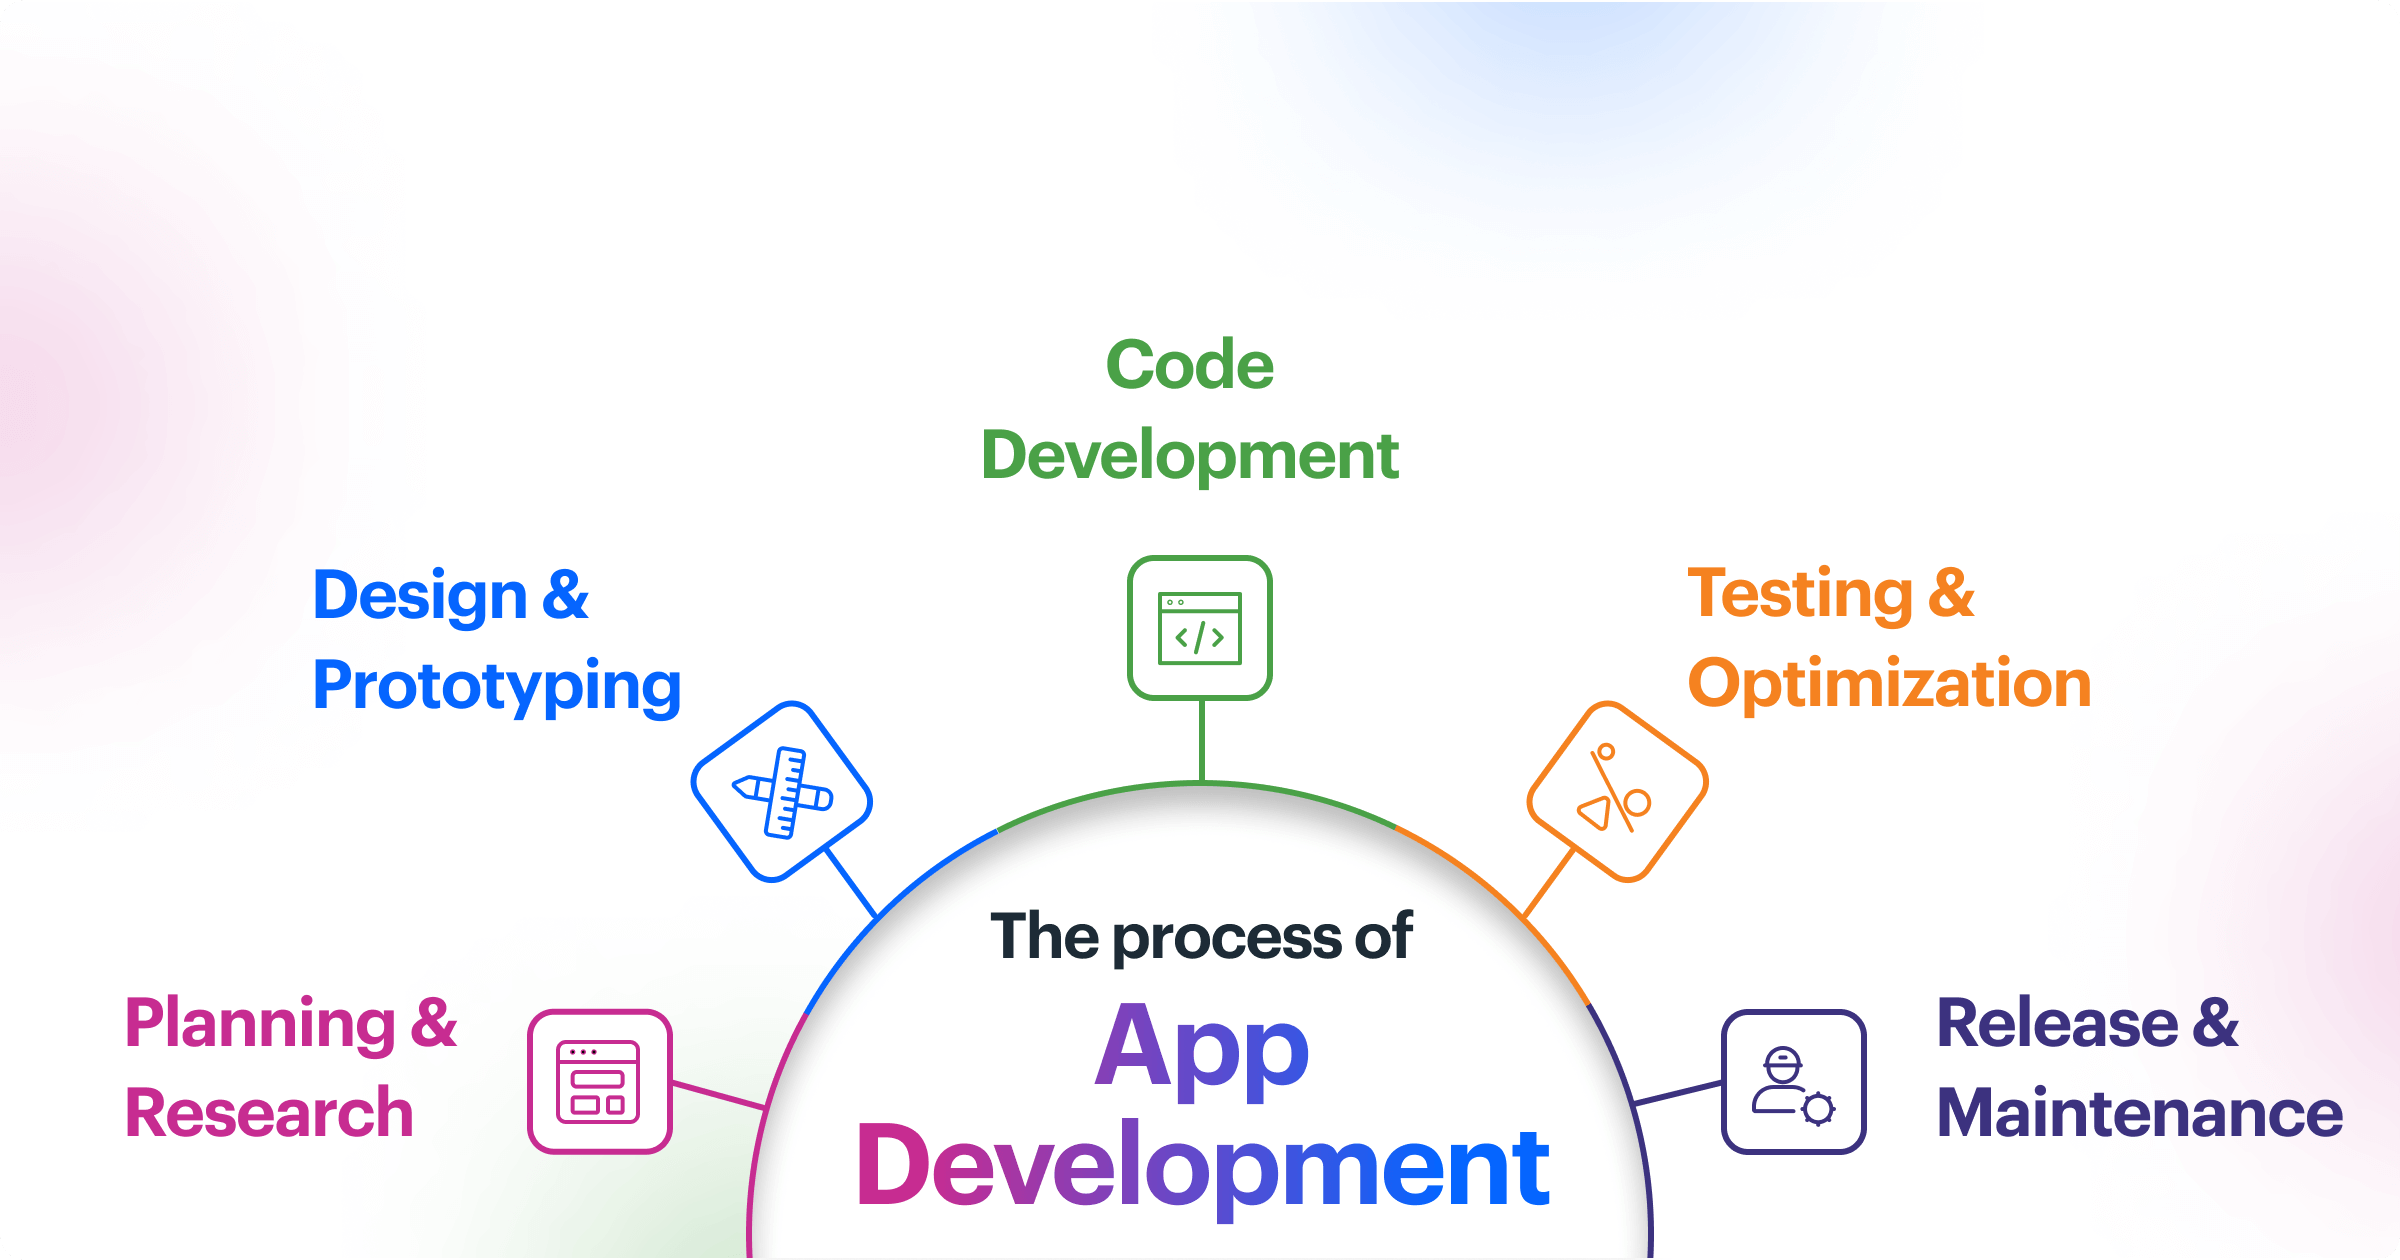 Application development process